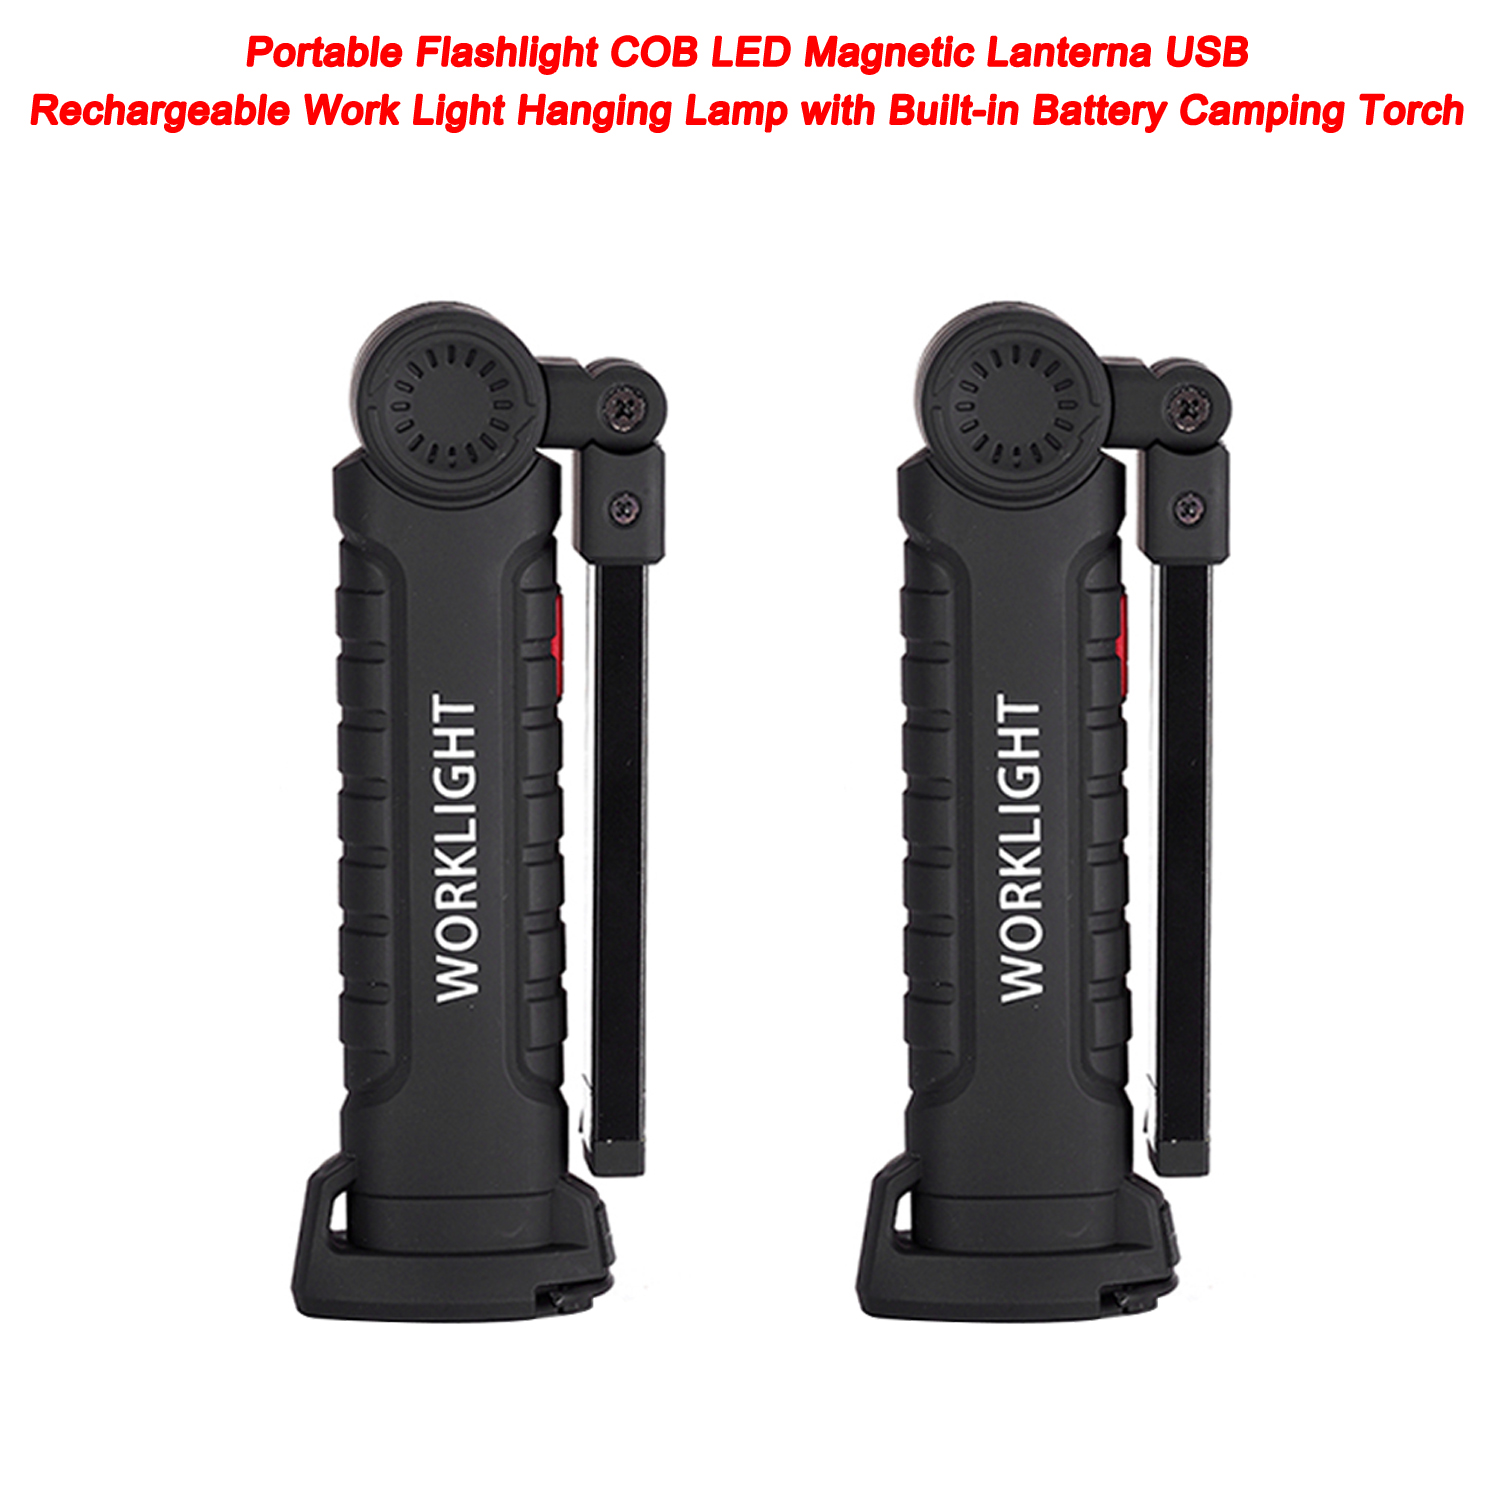 Linterna portátil COB LED linterna magnética USB recargable luz de trabajo lámpara colgante con batería incorporada antorcha de Camping